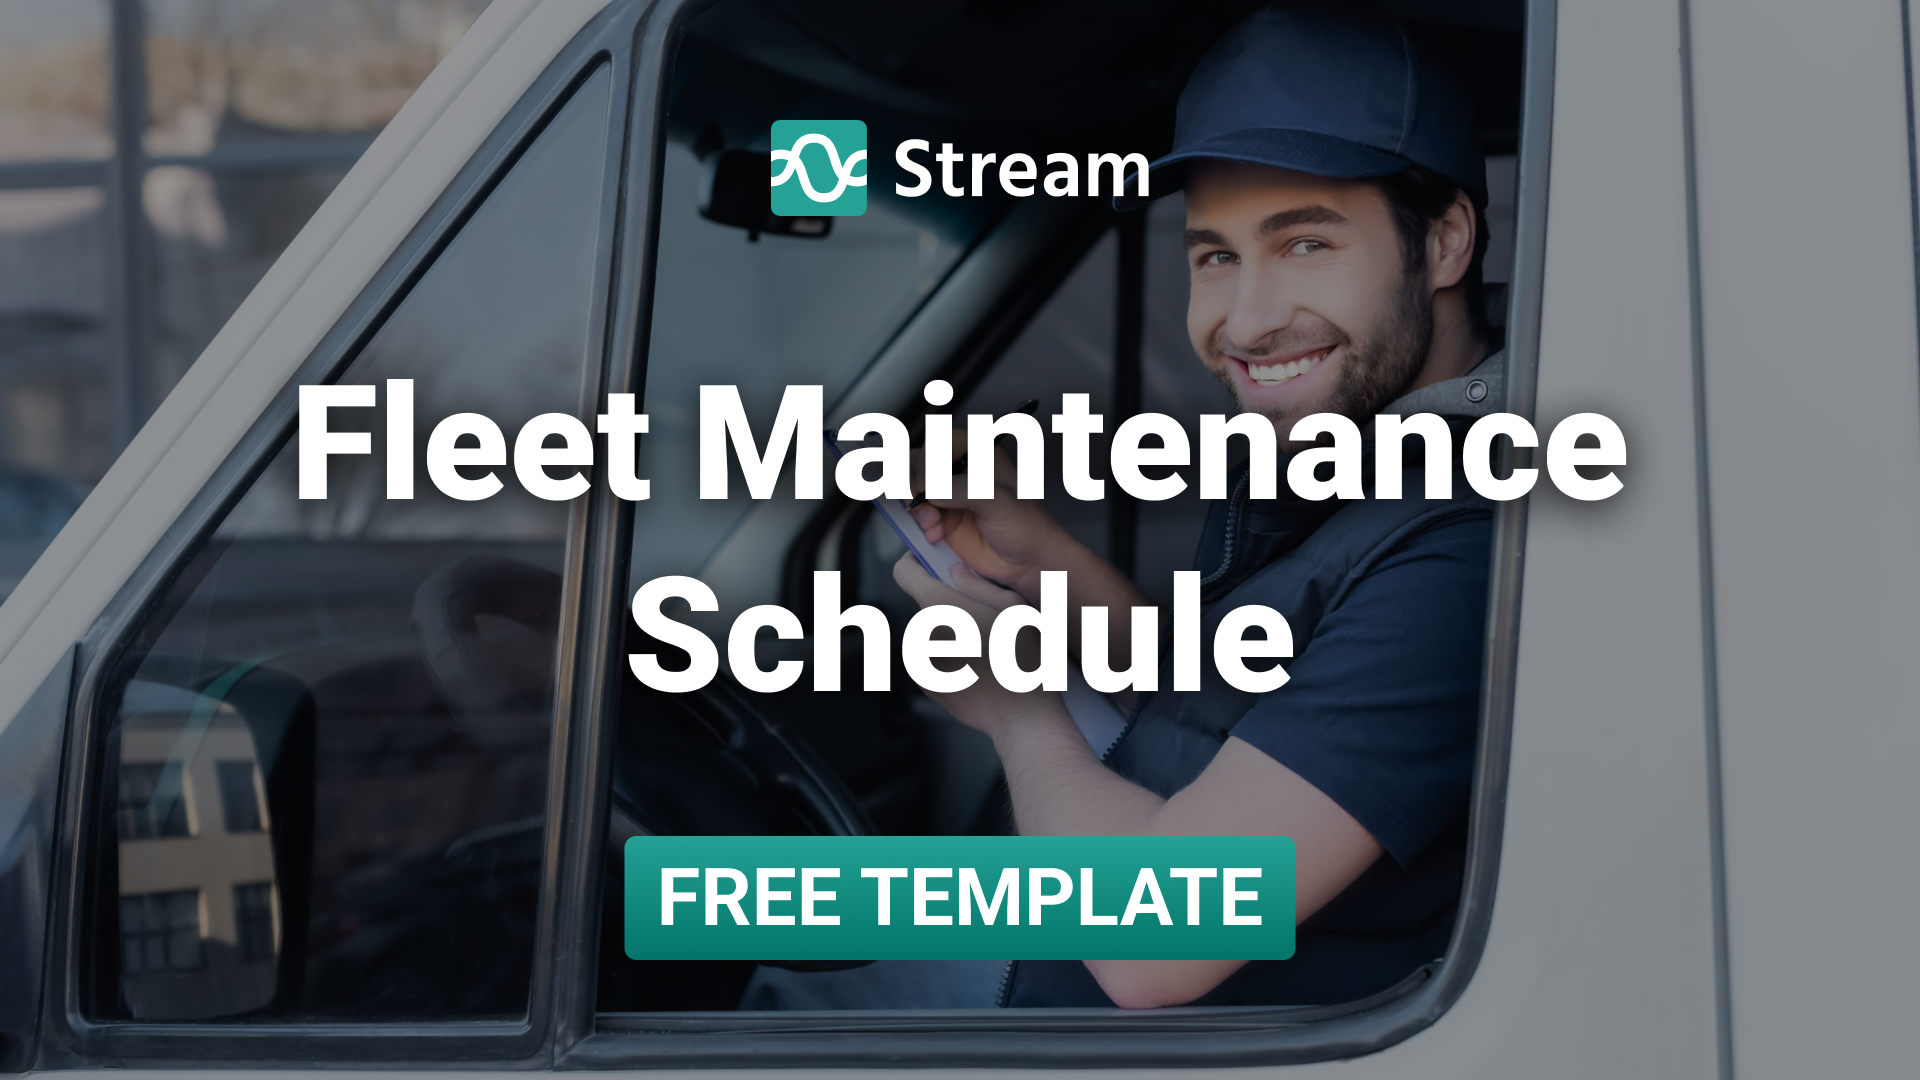 Fleet-Maintenance-Schedule-Template-FREE-Download-Featured-Image